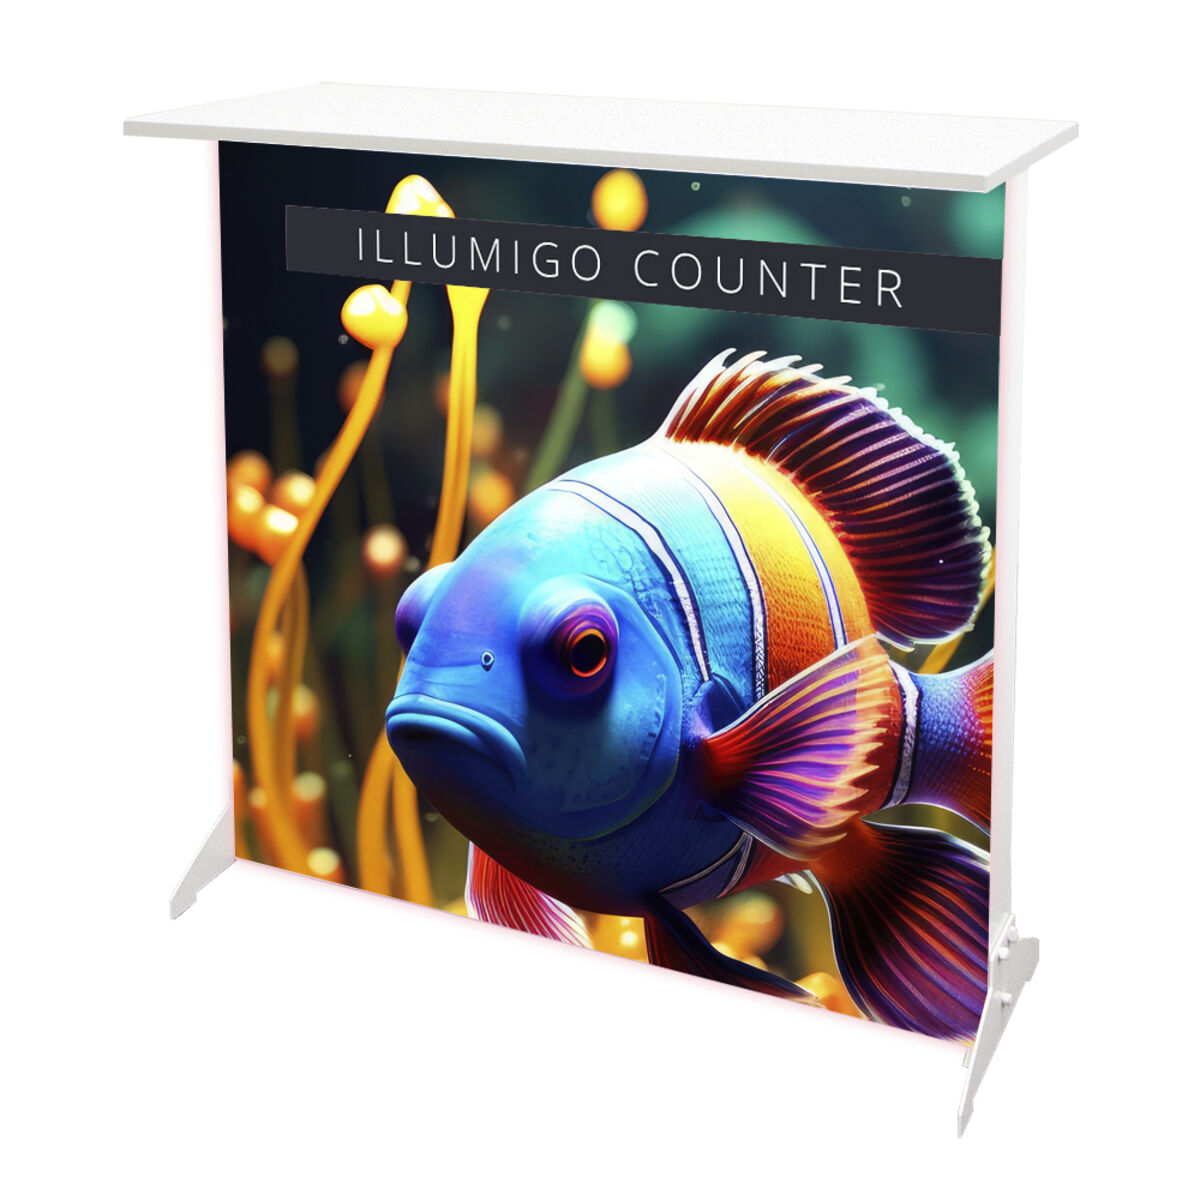 illumigo-counter-83472.jpg